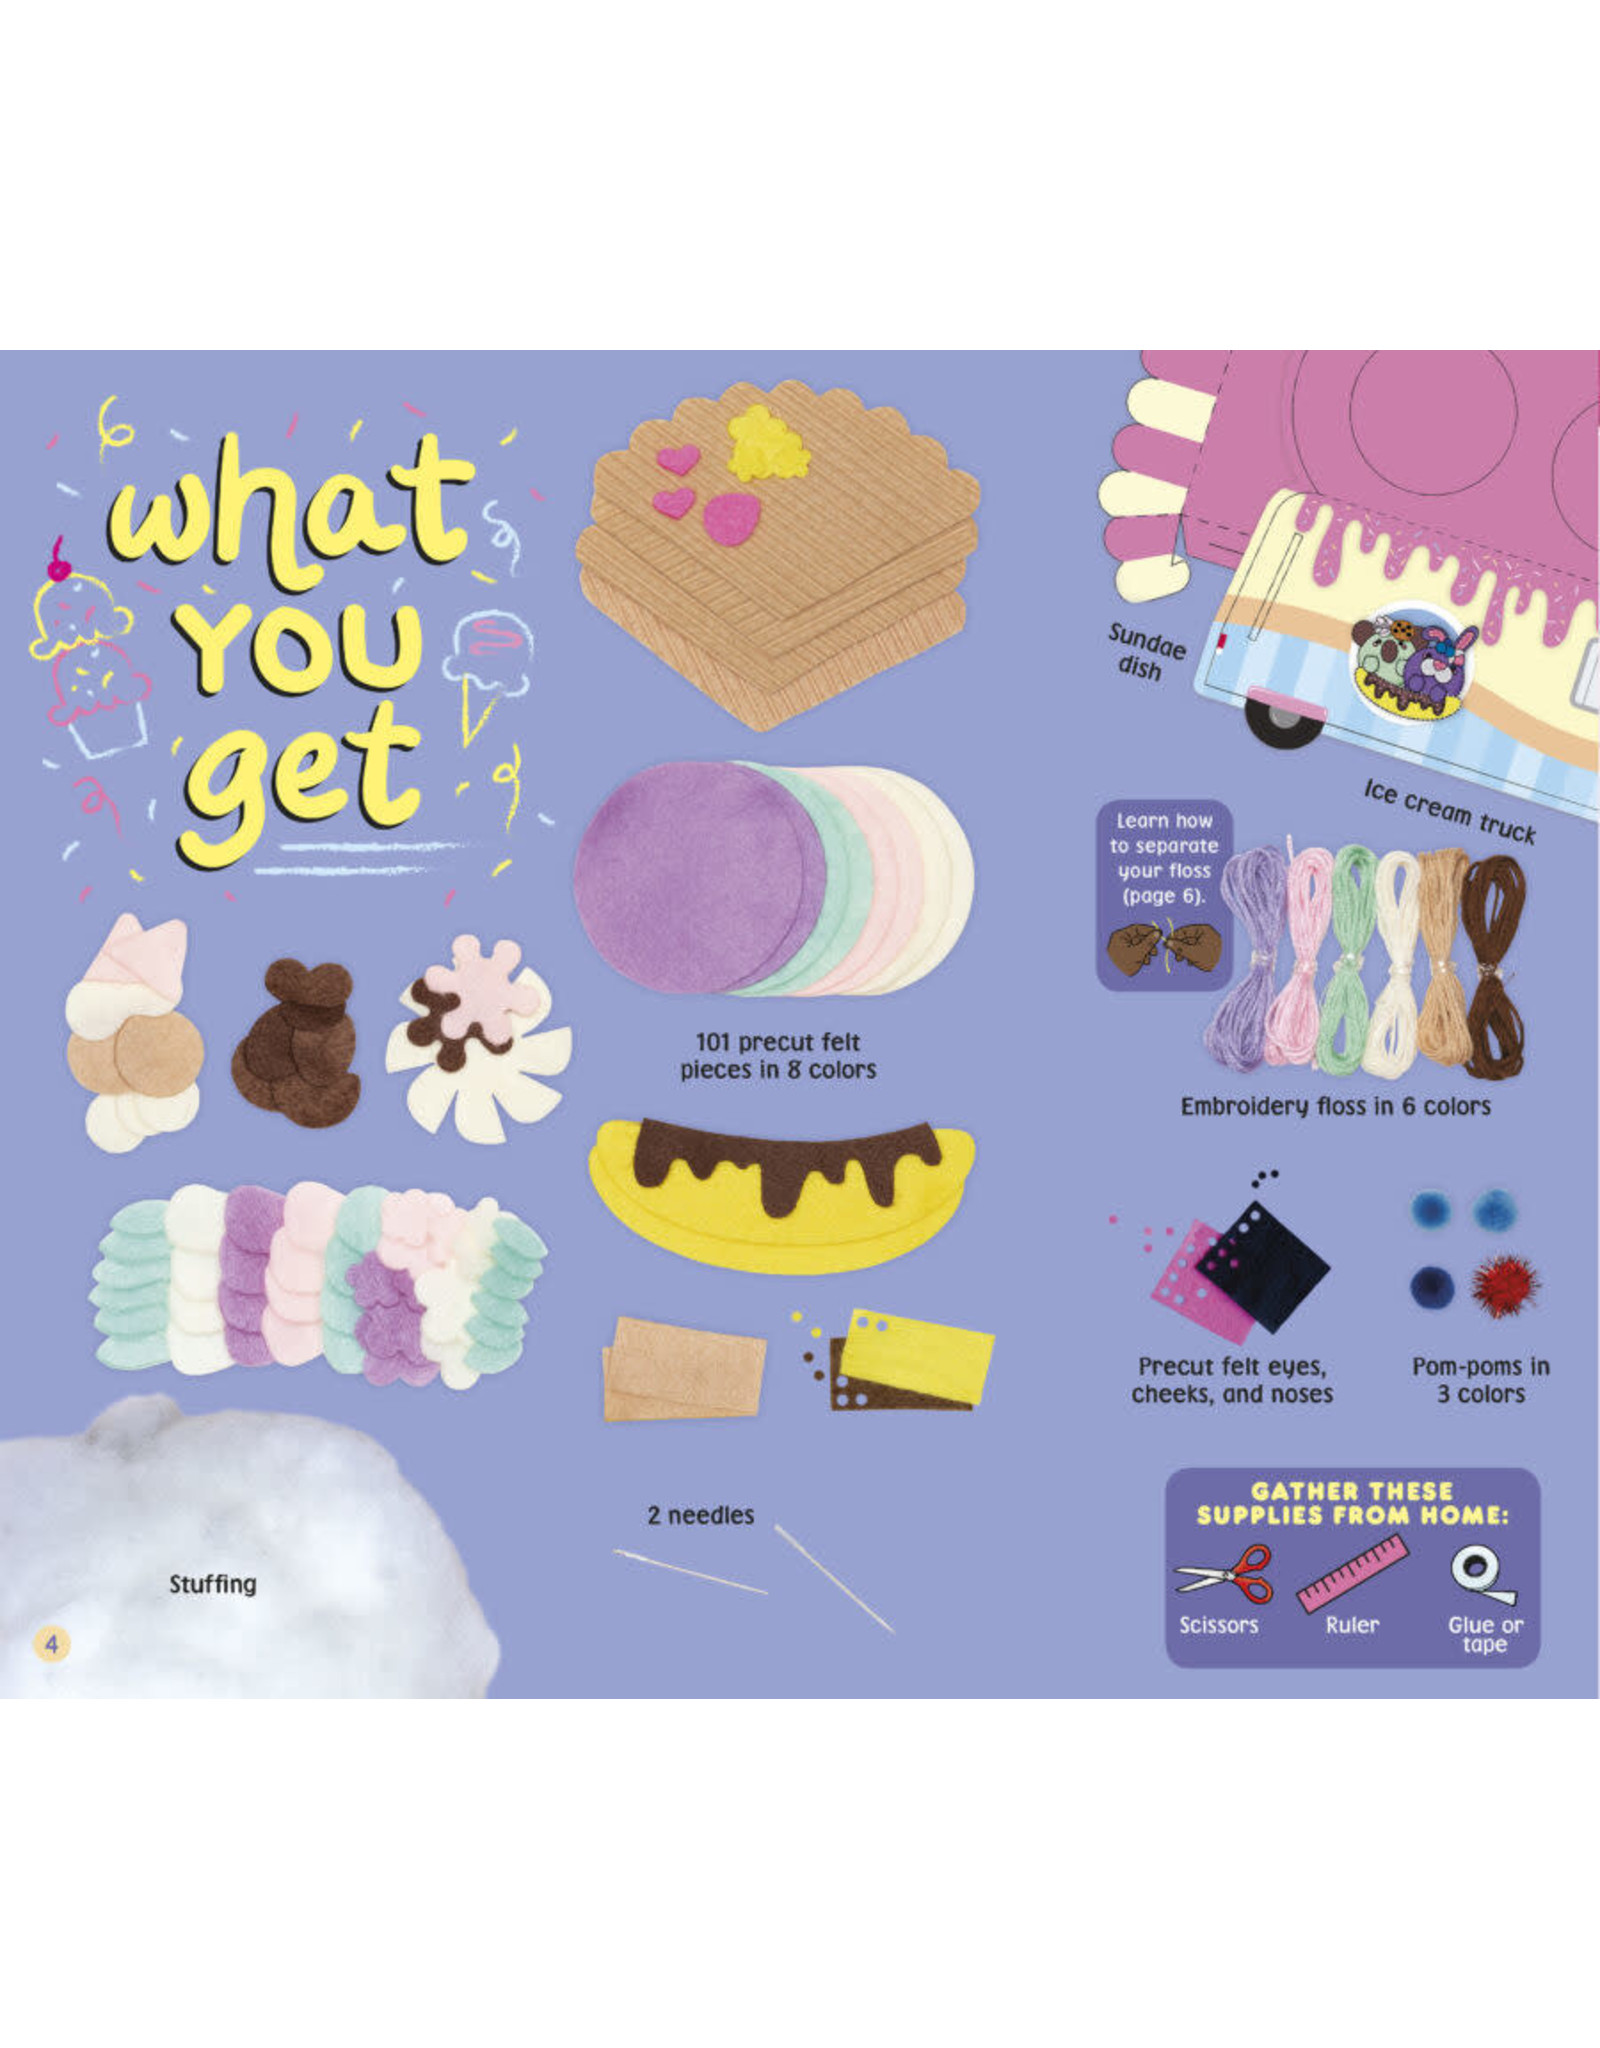 Sew Your Own Ice Cream Animals [Book]